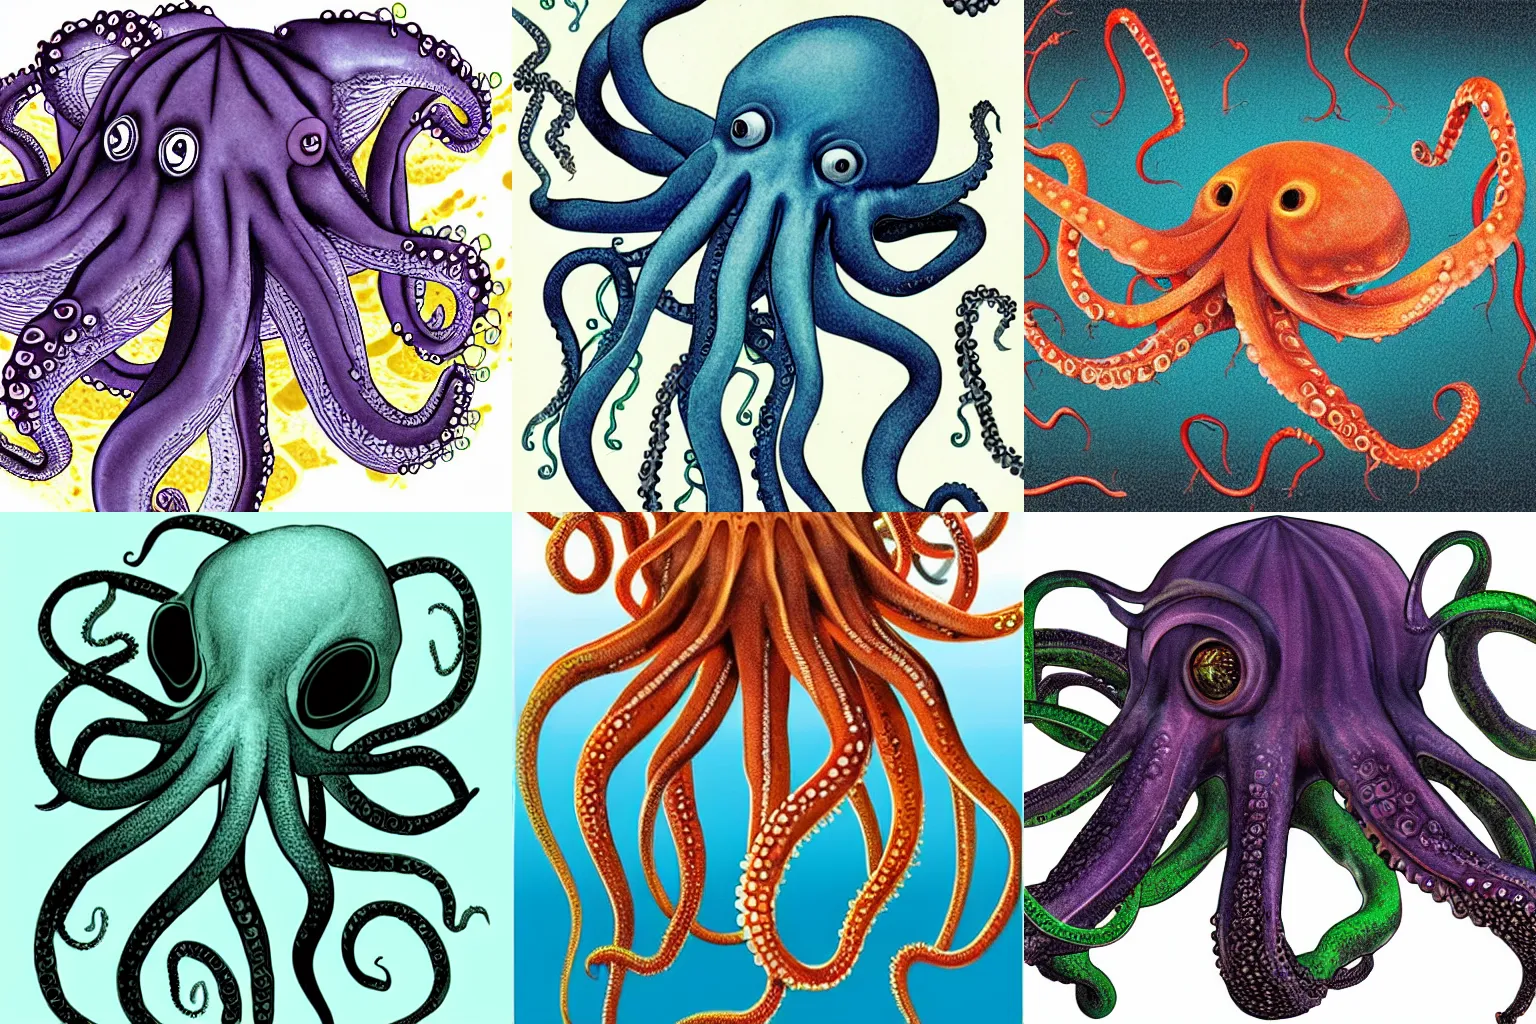 Prompt: alien octopus fish scientific biology illustration from textbook